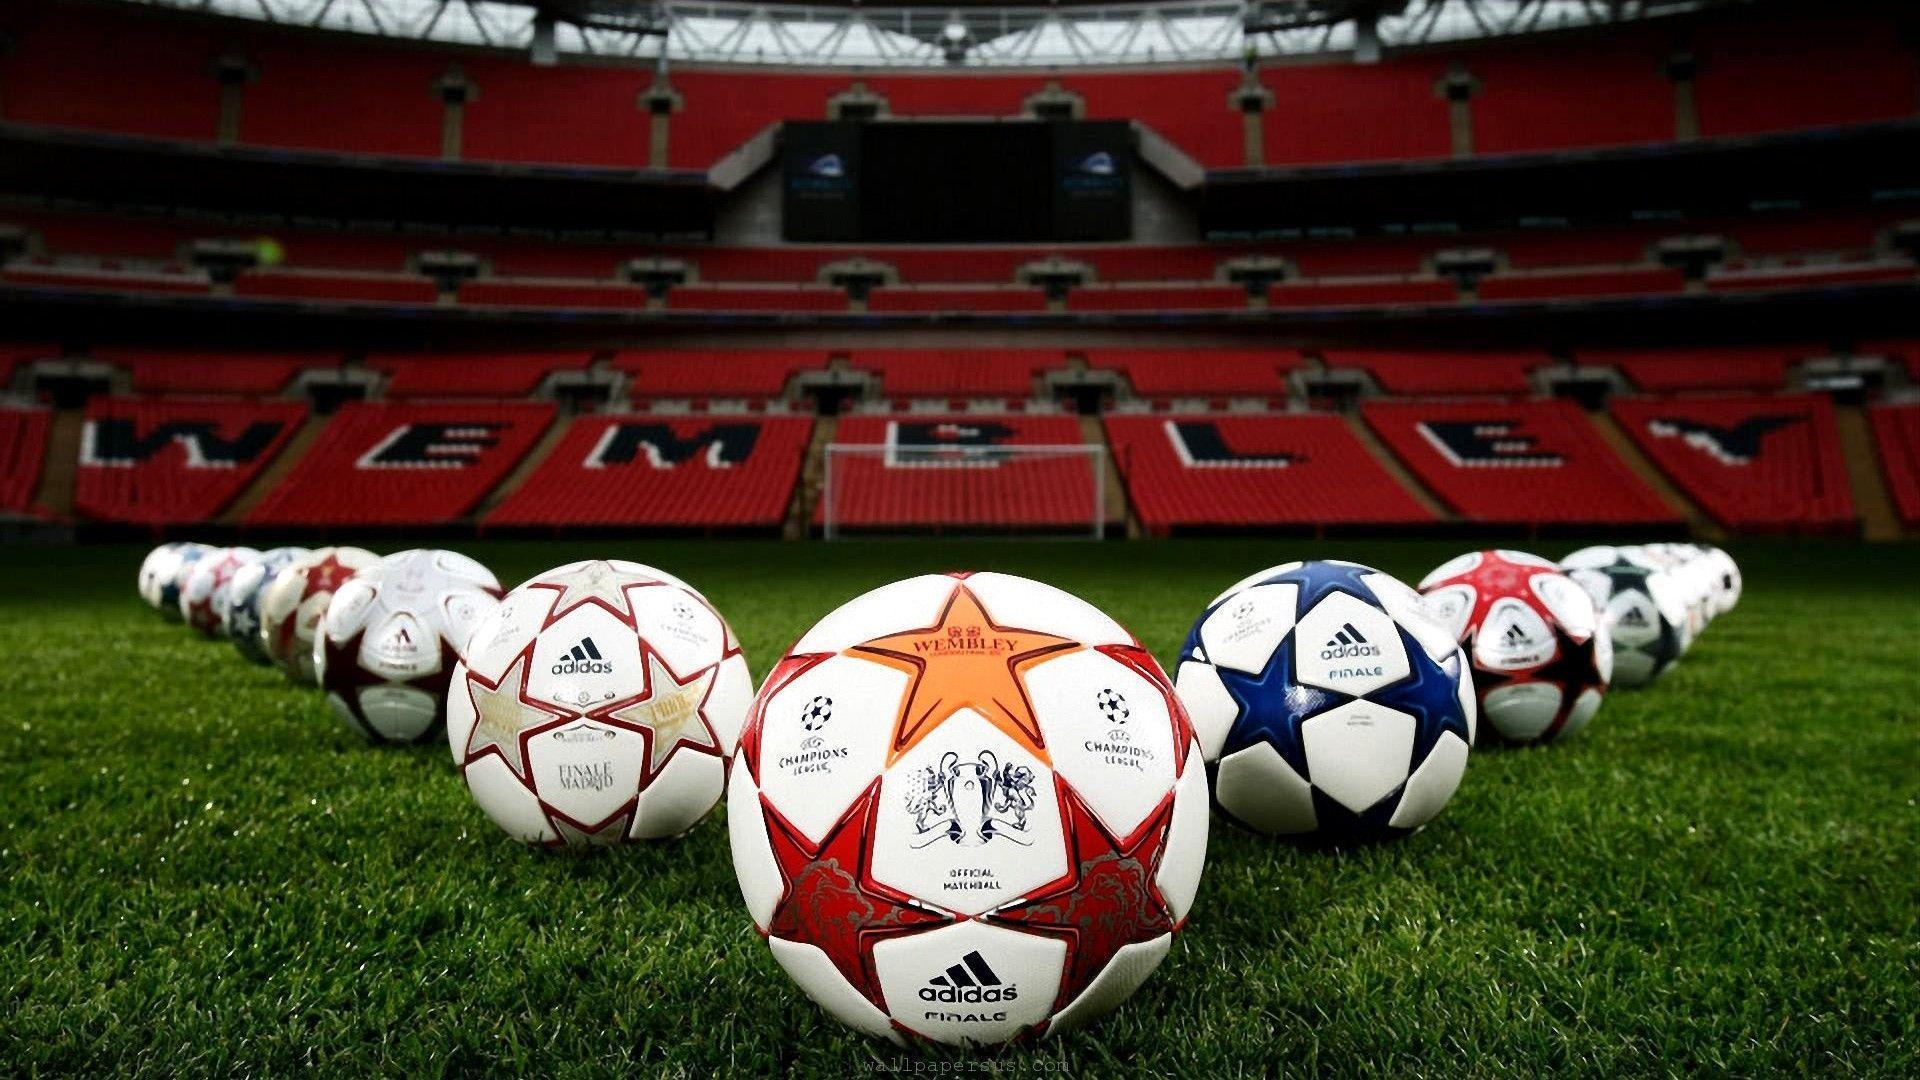 UEFA Champions League Ball Wembley Final 2013 HD Wallpaper. High